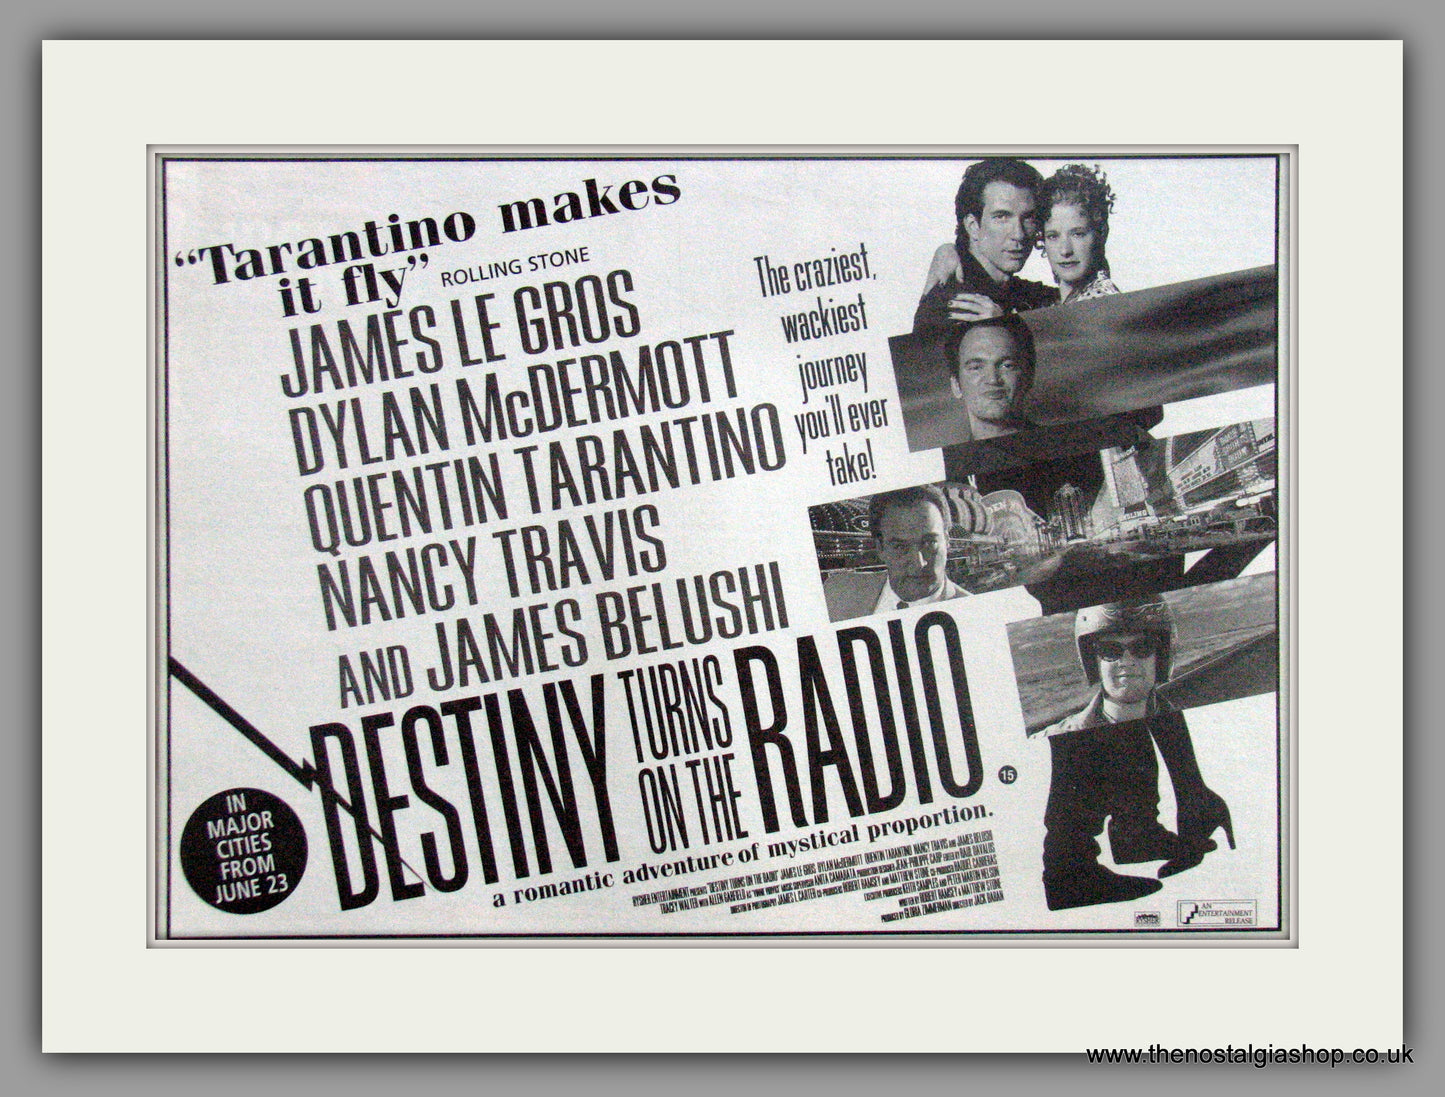 Destiny Turns On The Road. Original advert 1995 (AD50678)